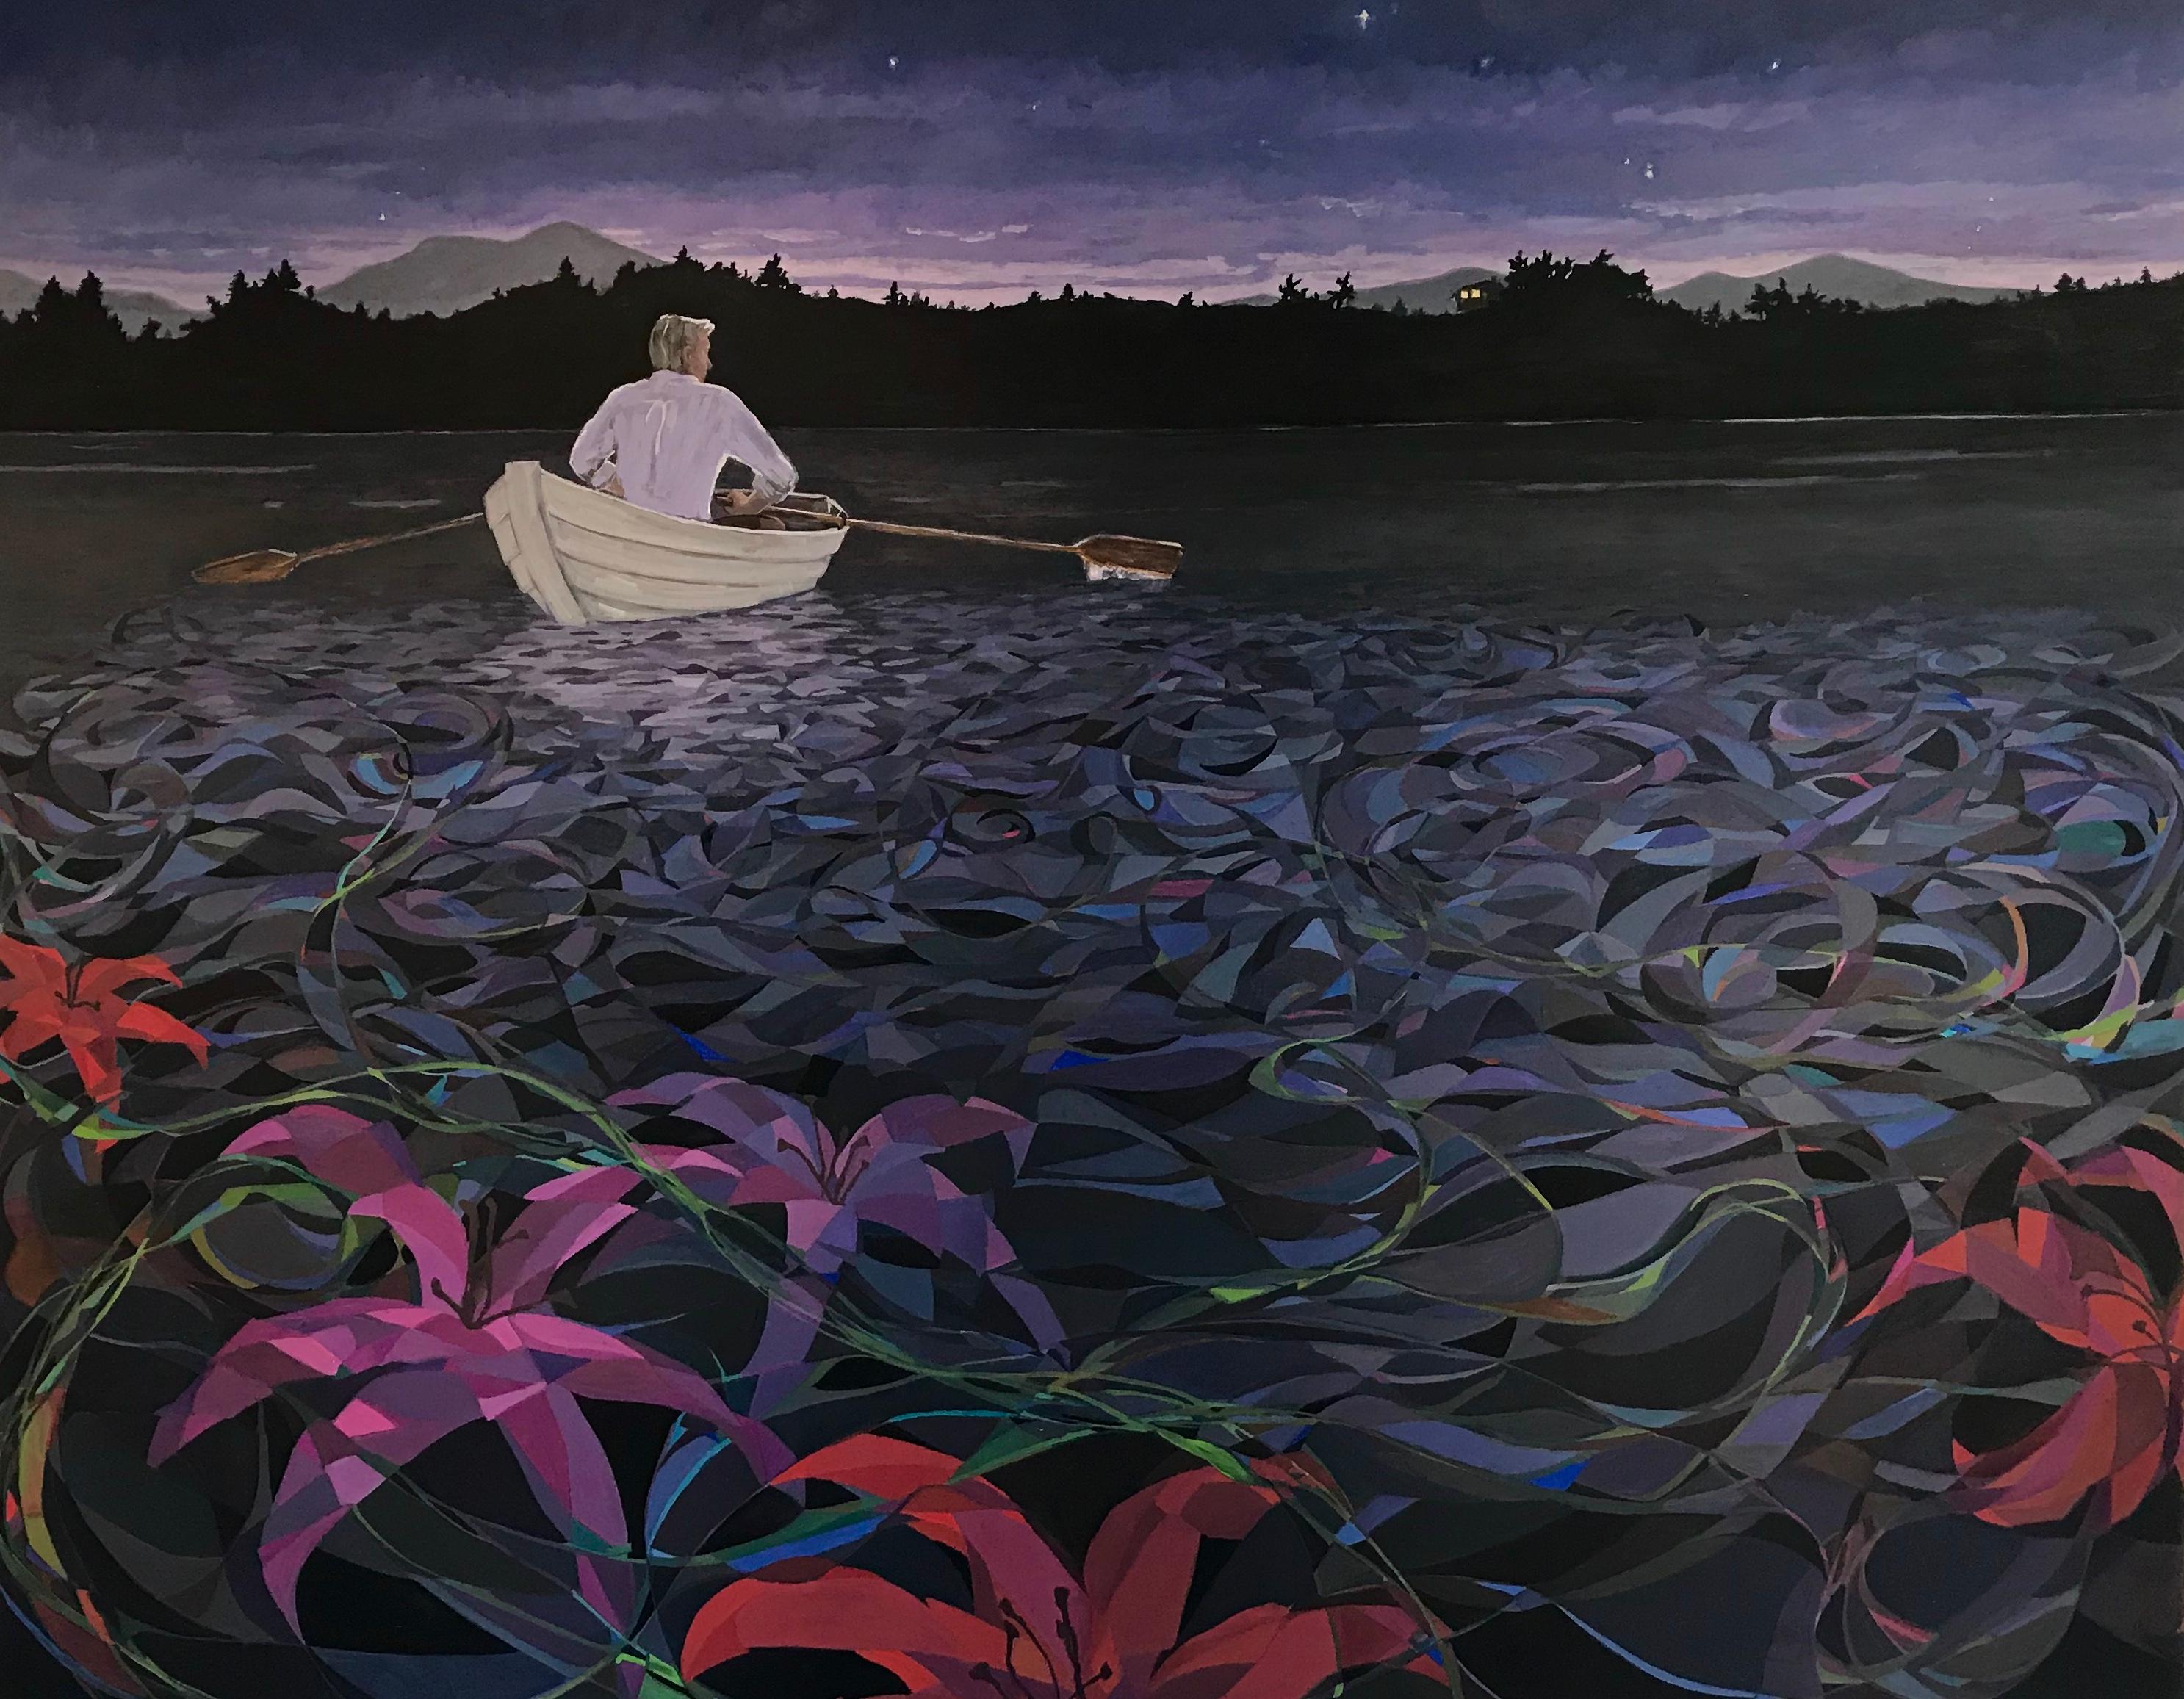 KK Kozik Landscape Painting - Flint Hill Lake, Horizontal Landscape, Row Boat in Lake, Violet, Red, and White